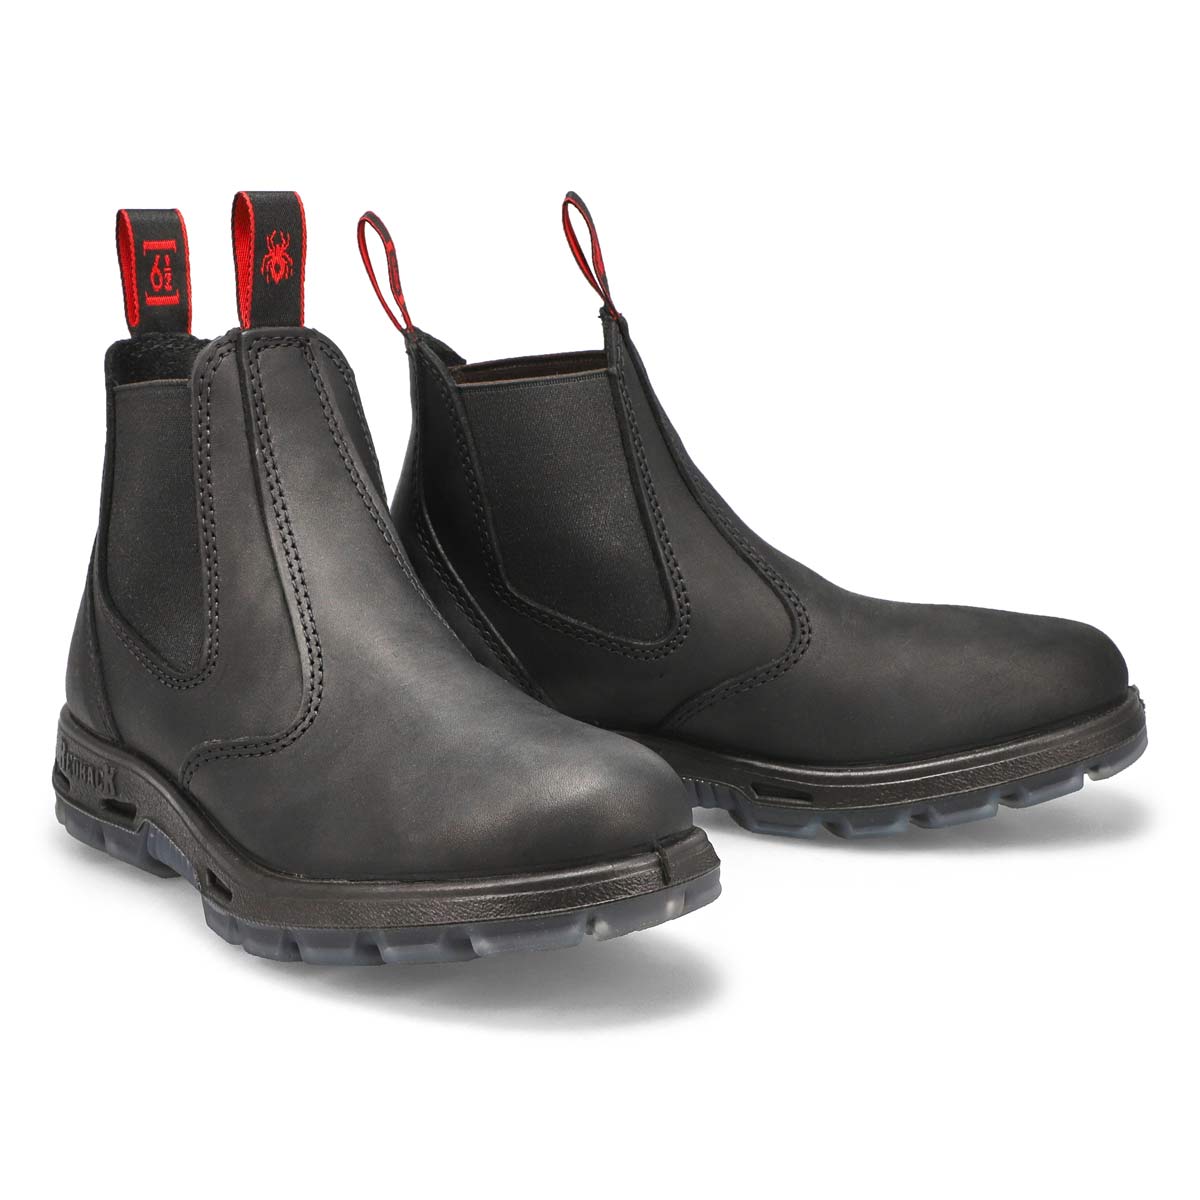 Unisex Bobcat Leather Pull On Boot - Black